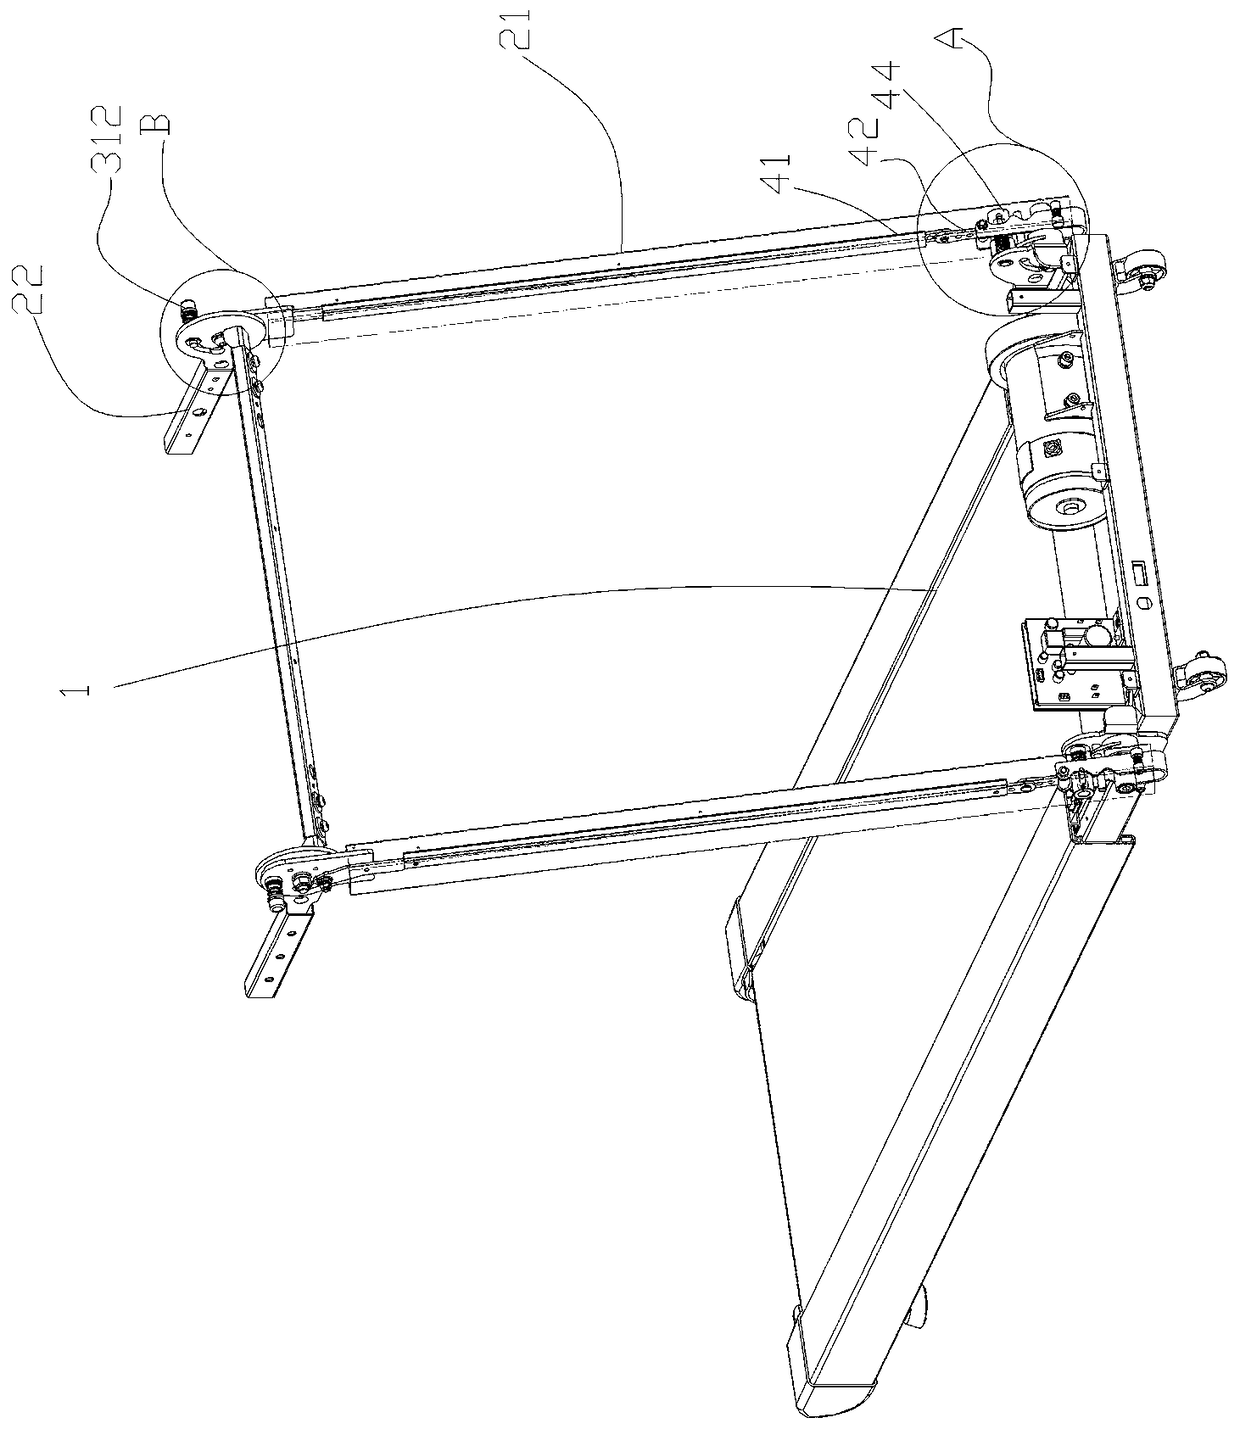 Folding mechanism and treadmill using same as column folding mechanism